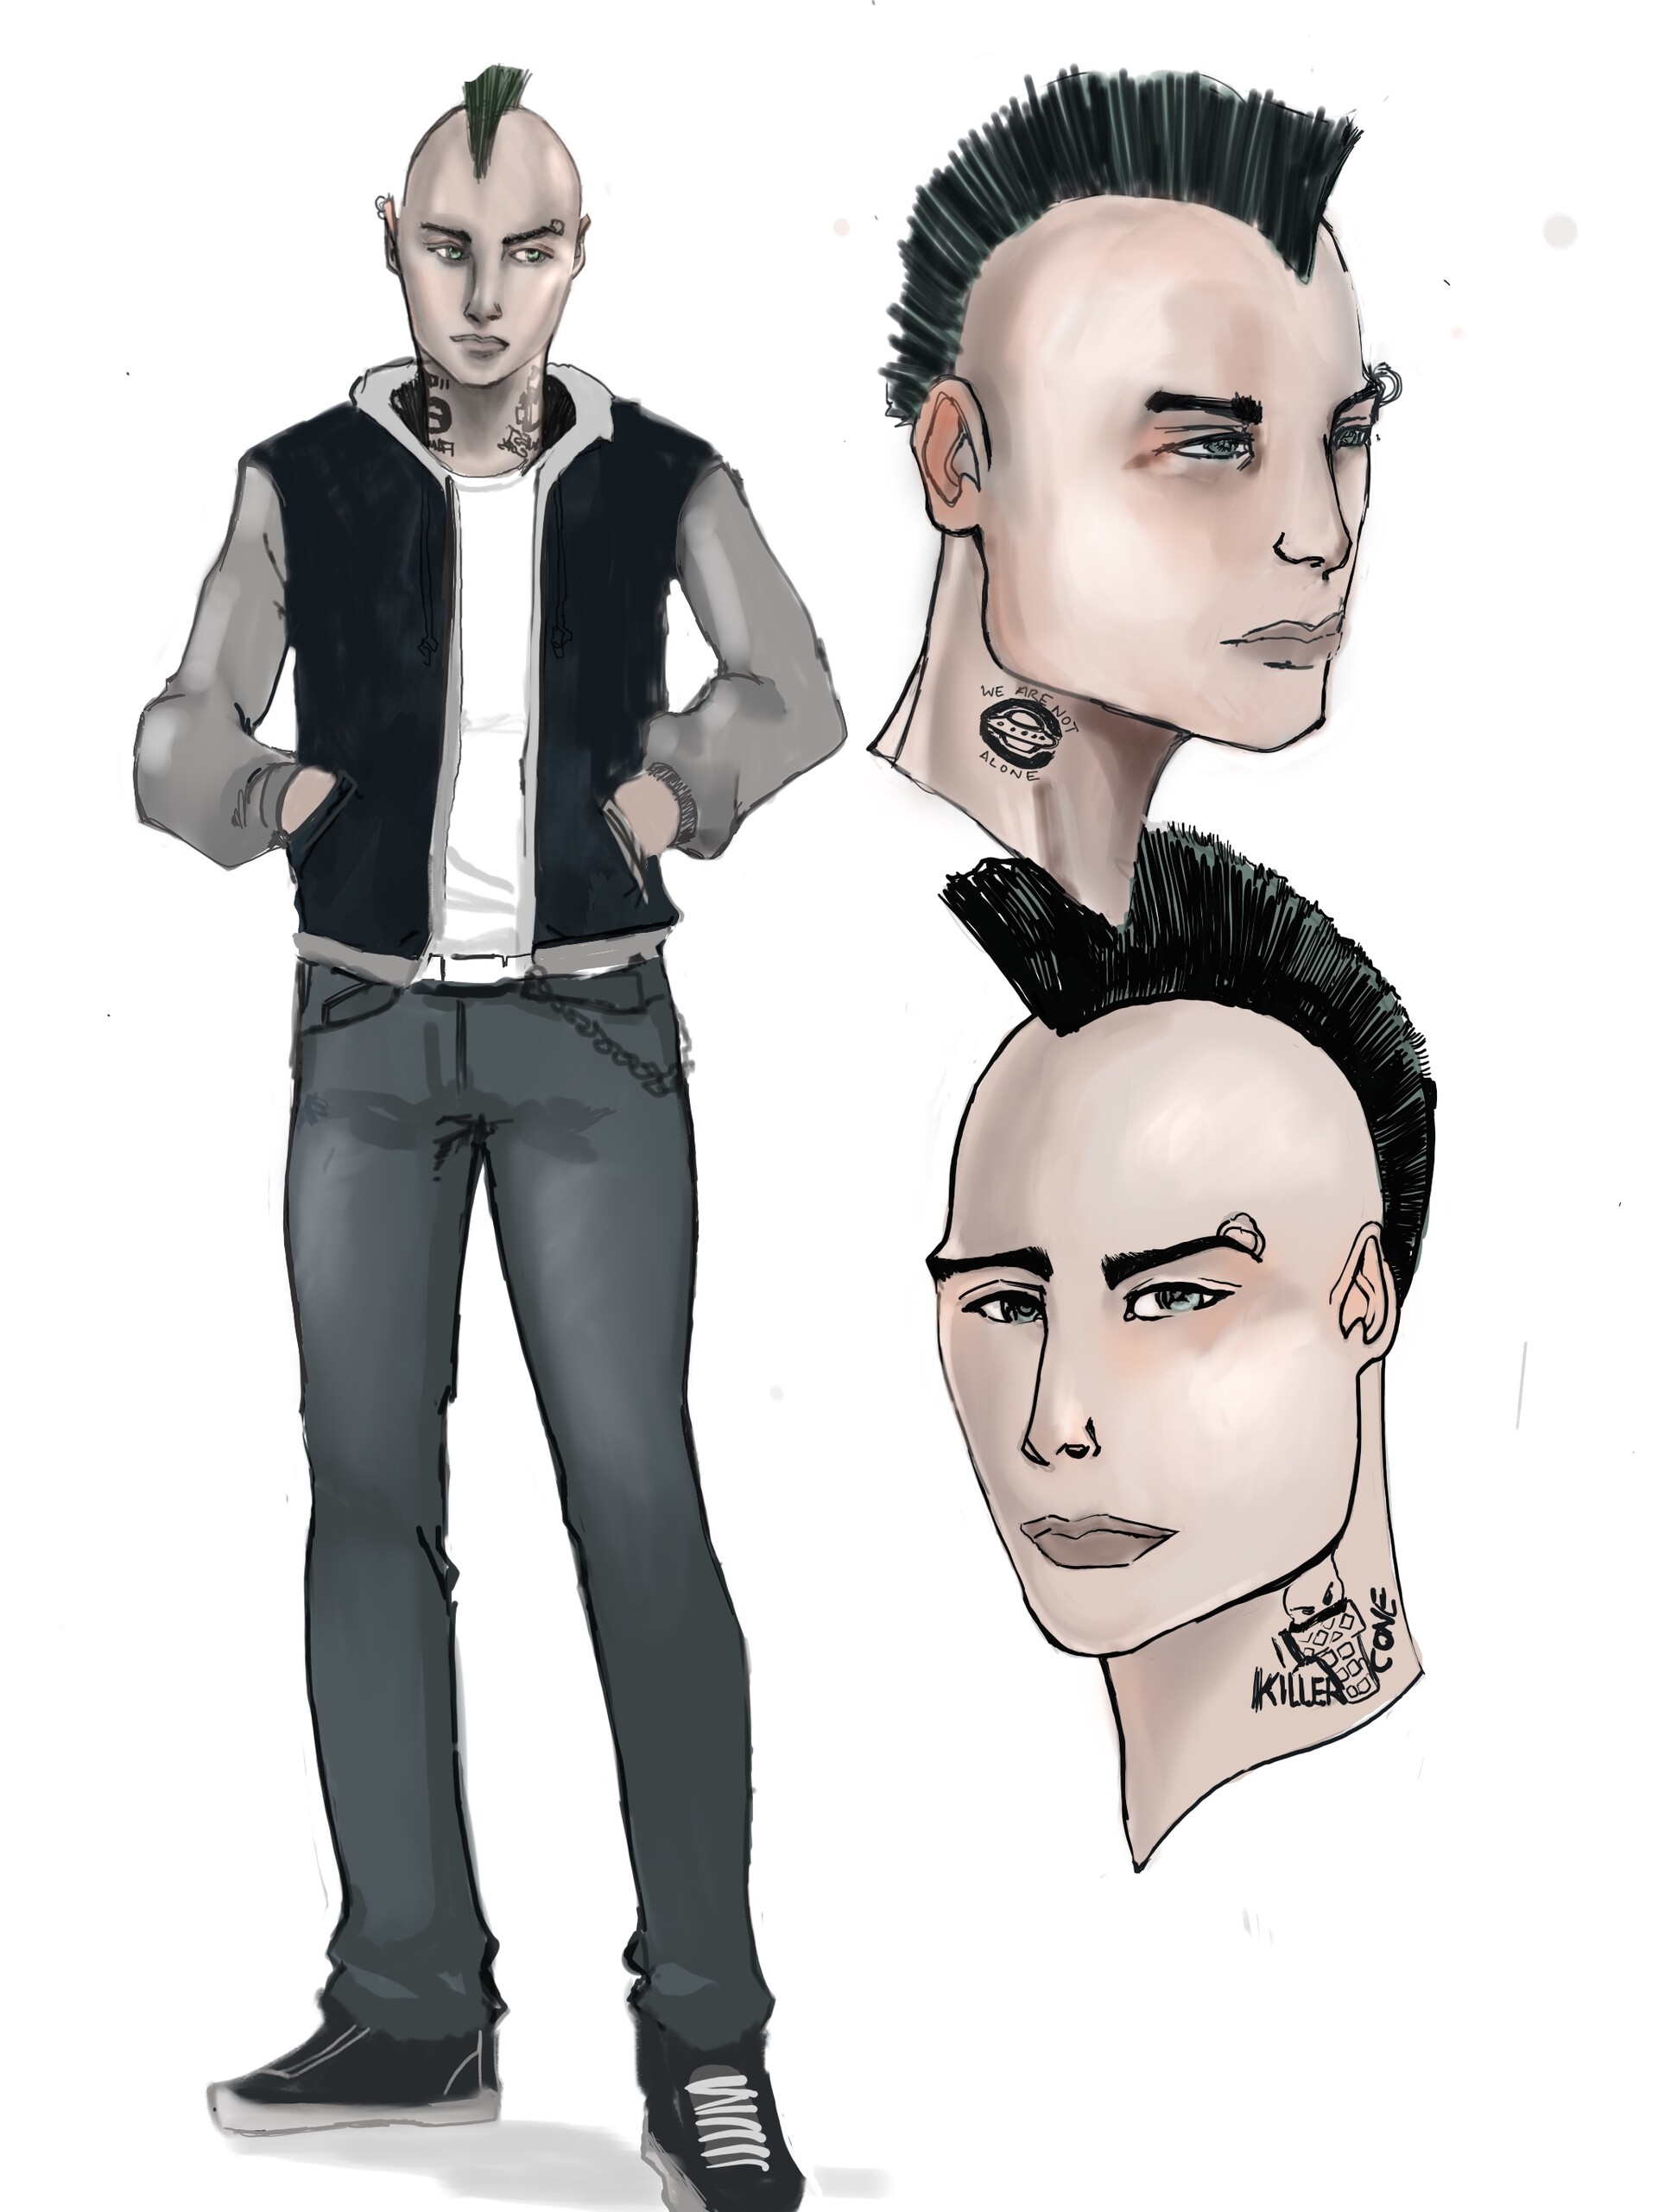 ArtStation - Character design: Stefan